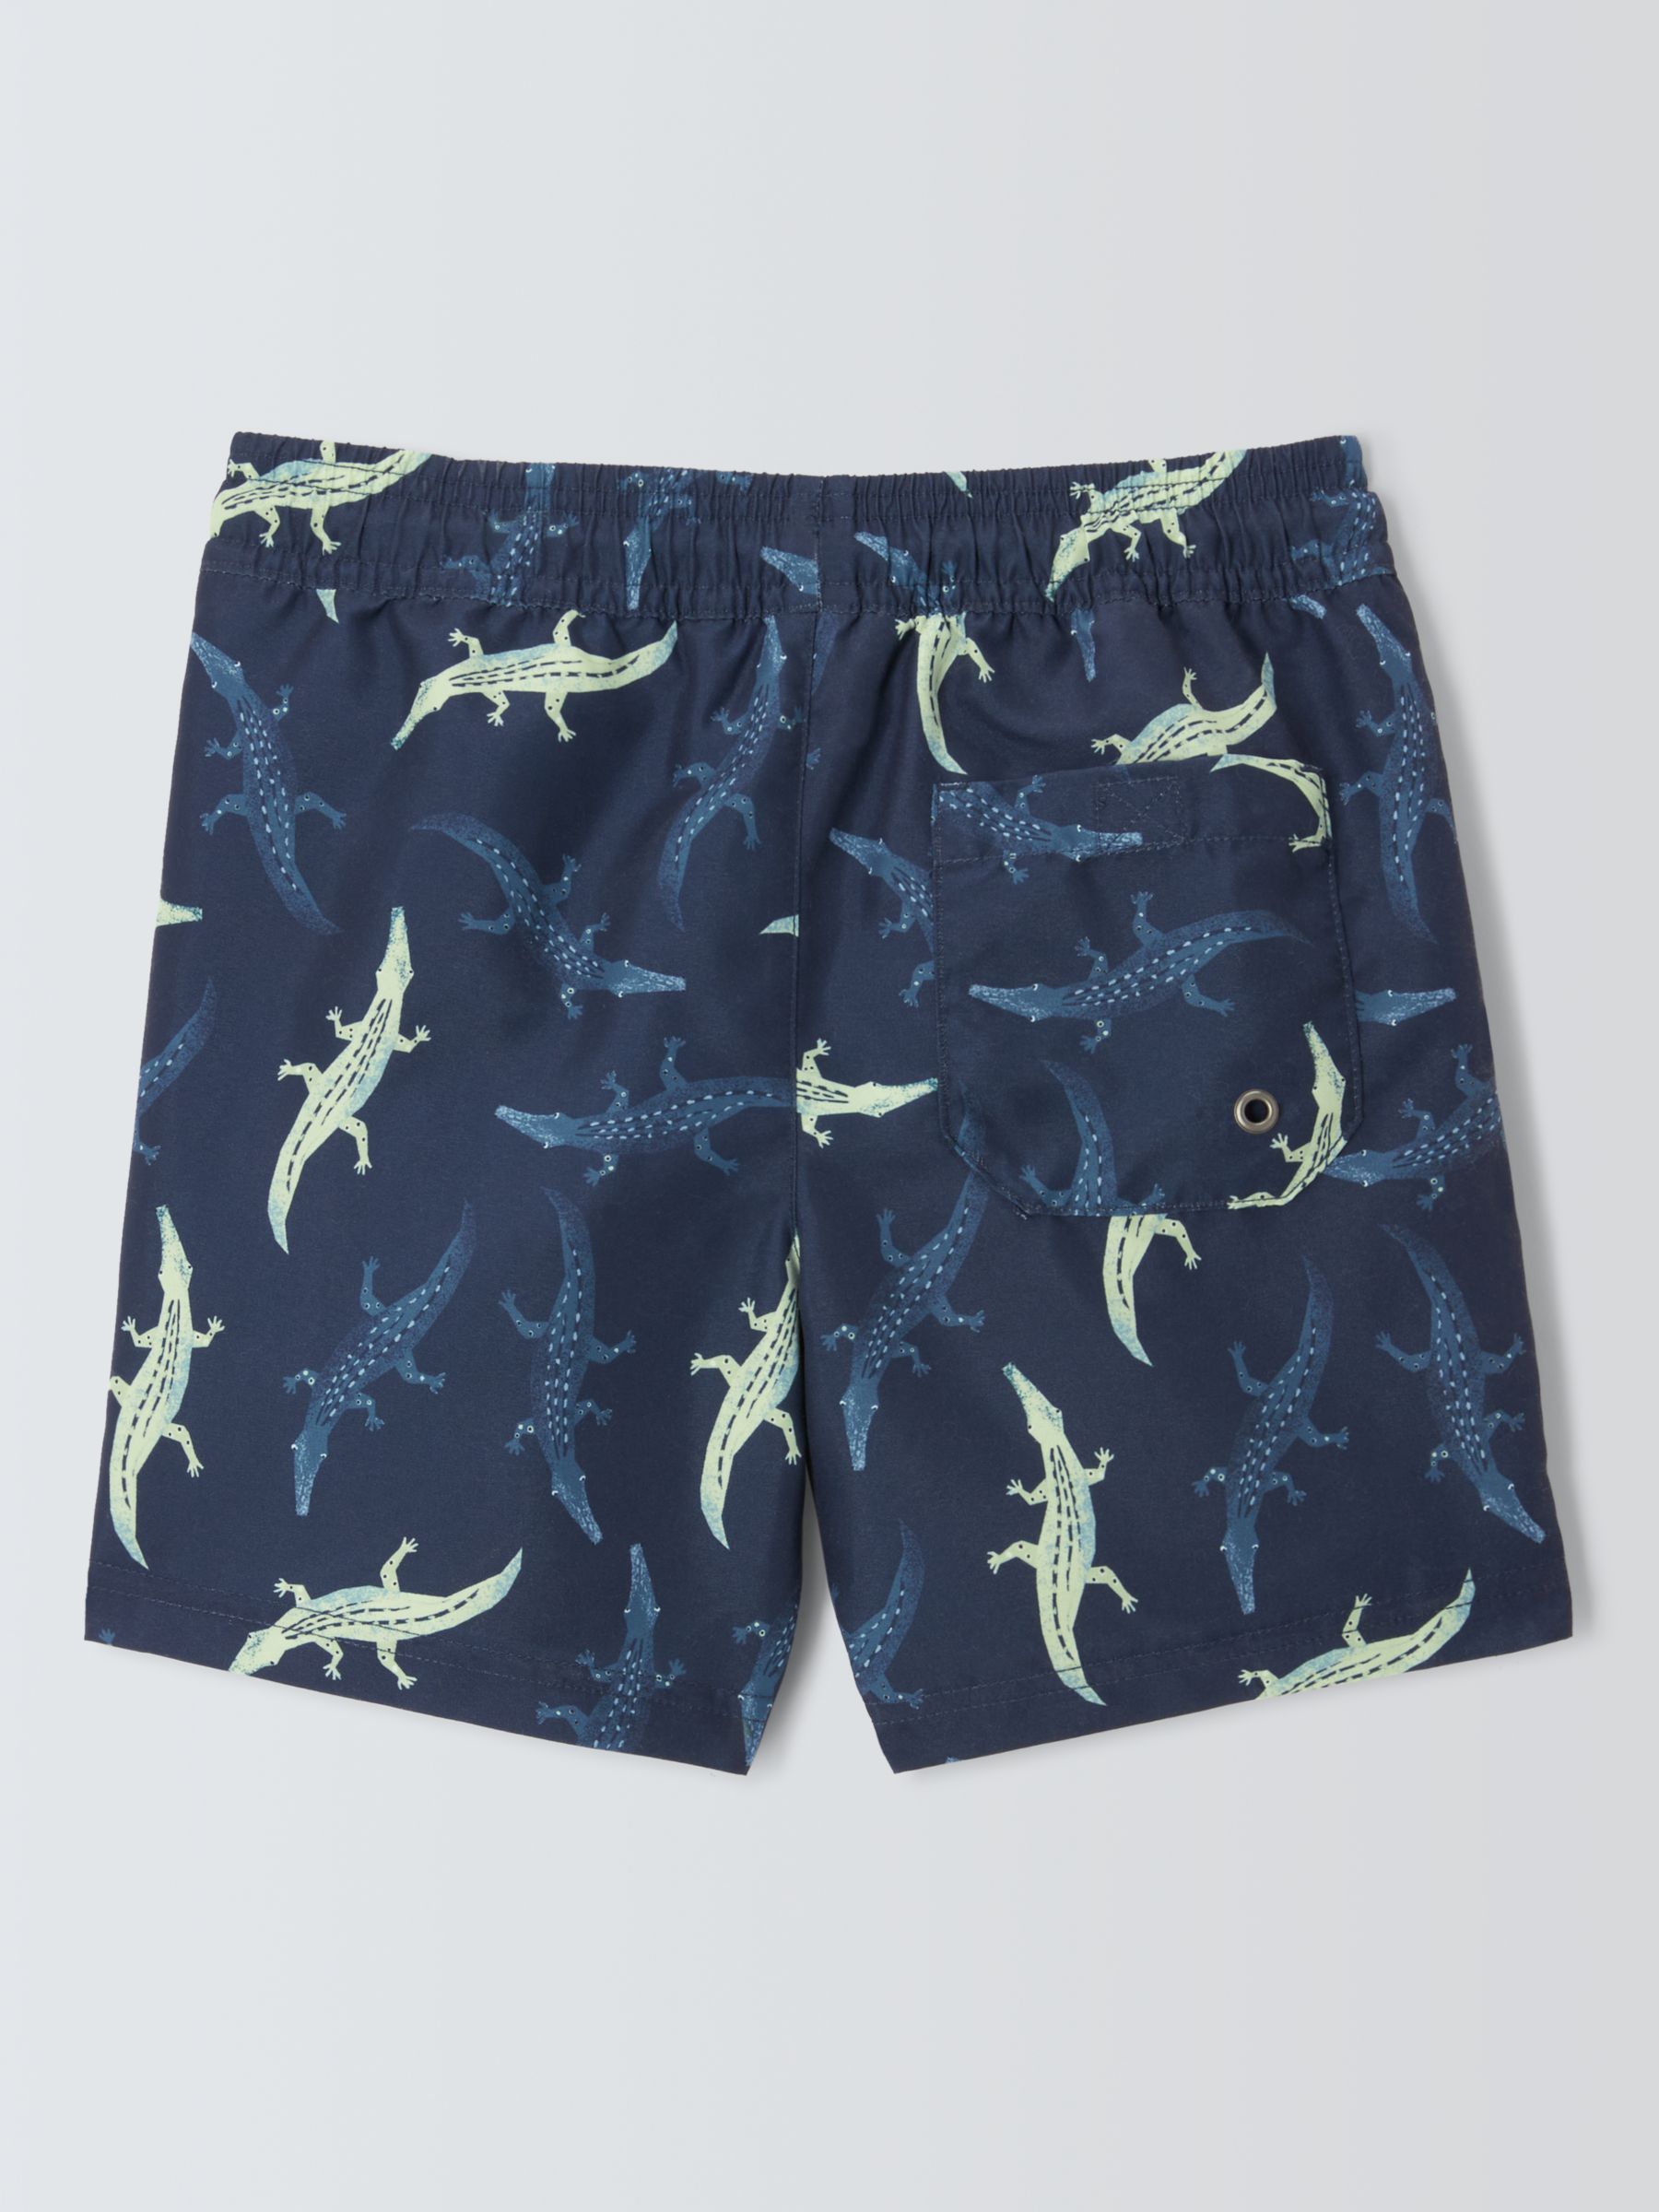 John Lewis Kids' Crocodile Print Swim Shorts, Navy/Multi, 7 years